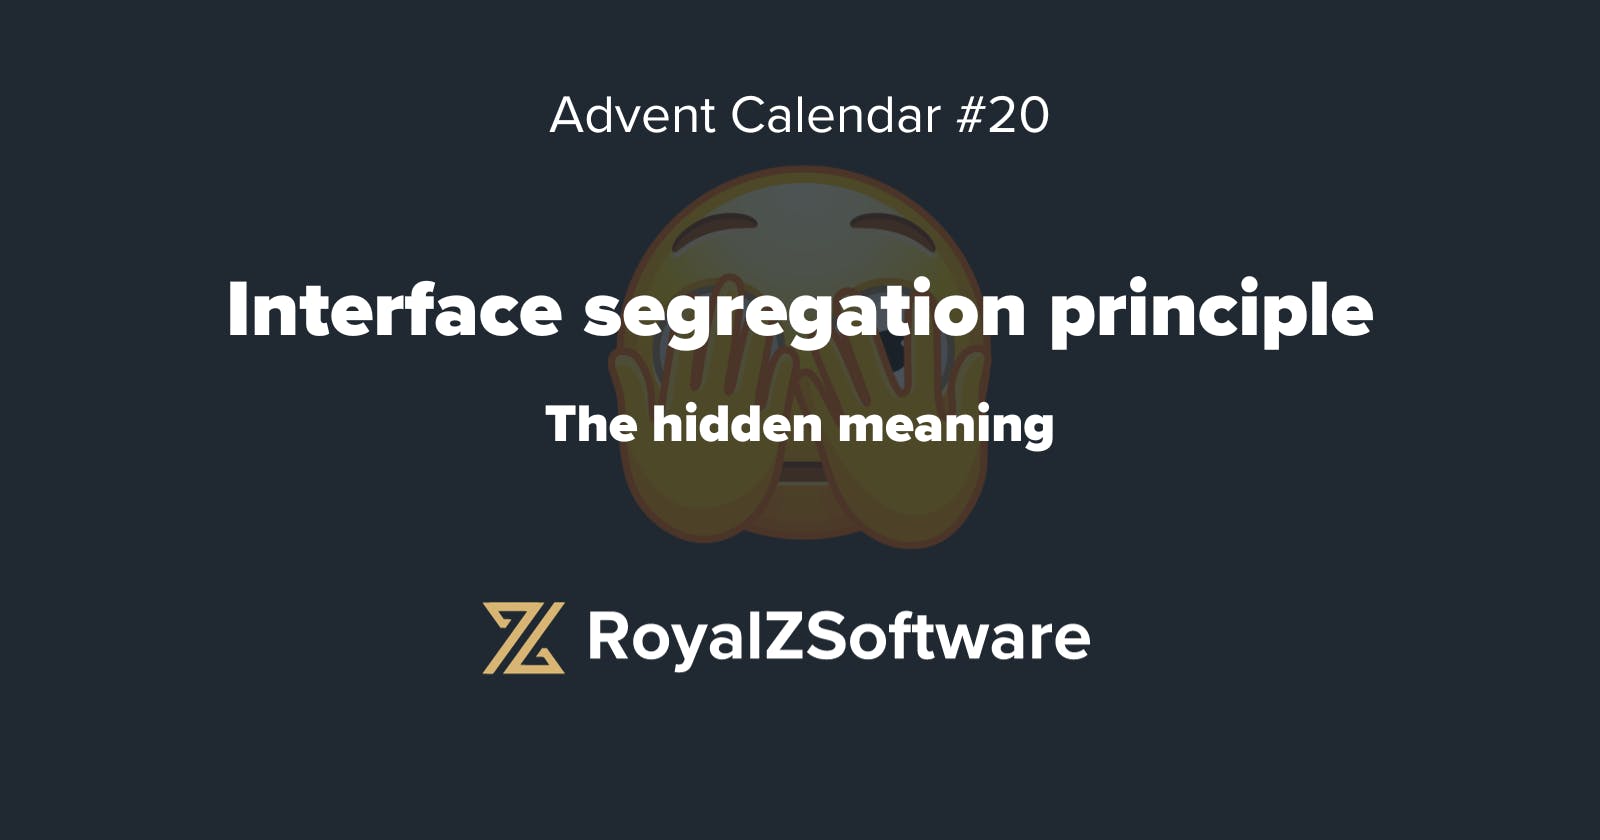 Advent Calendar #20 - The interface segregation principle